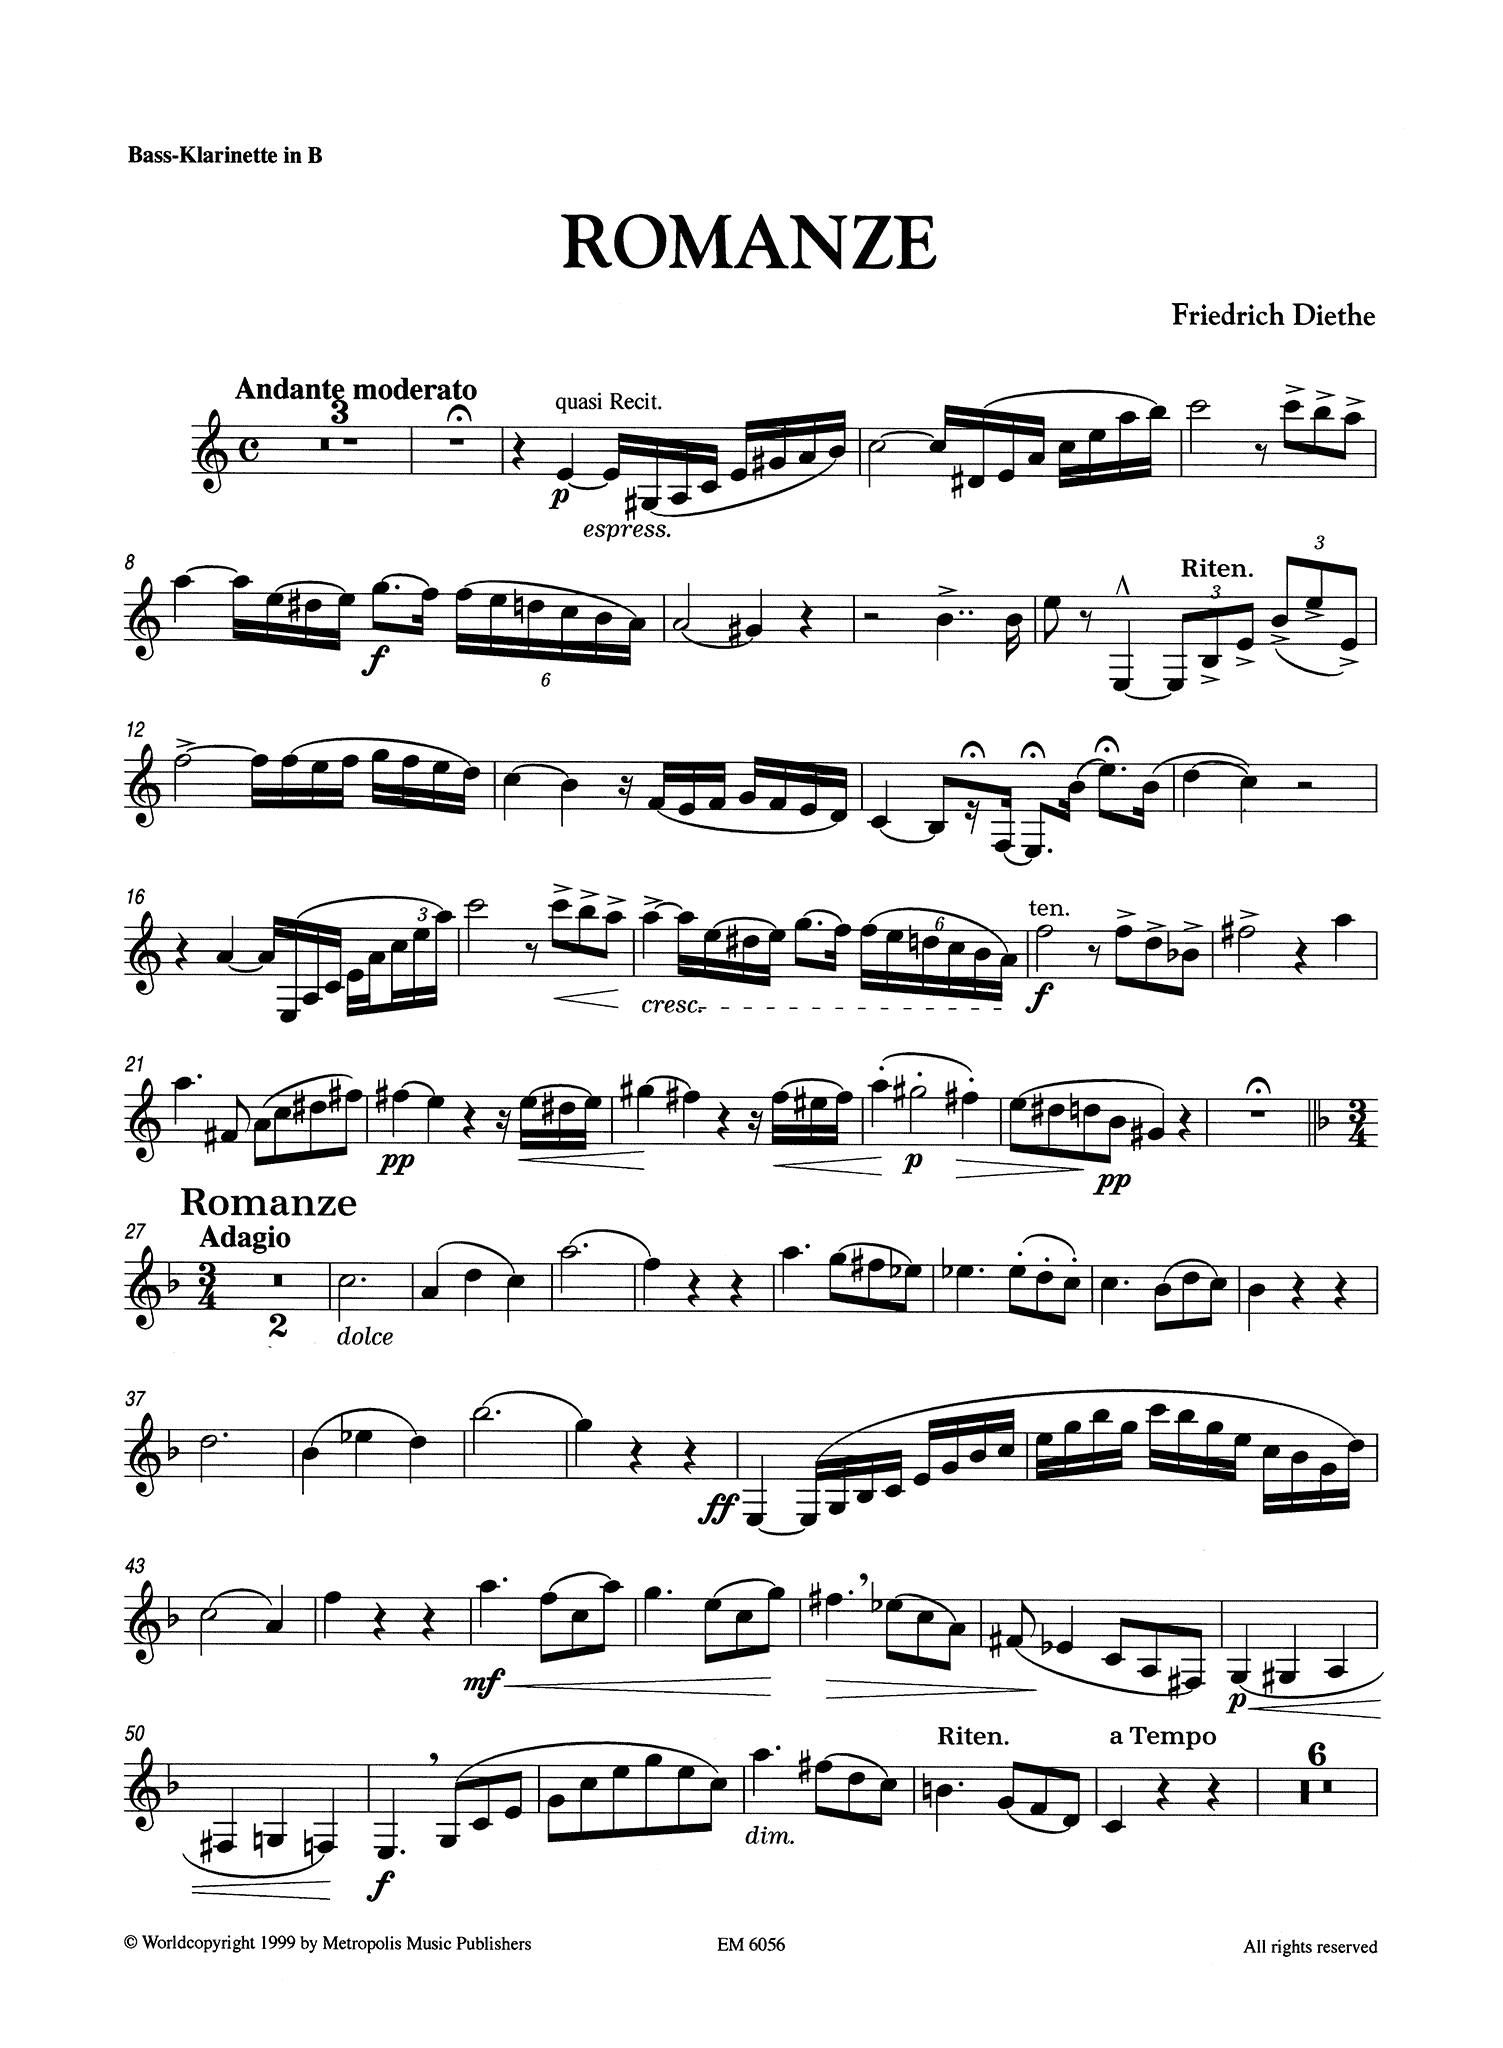 Diethe, Friedrich Romanze Bass Clarinet part